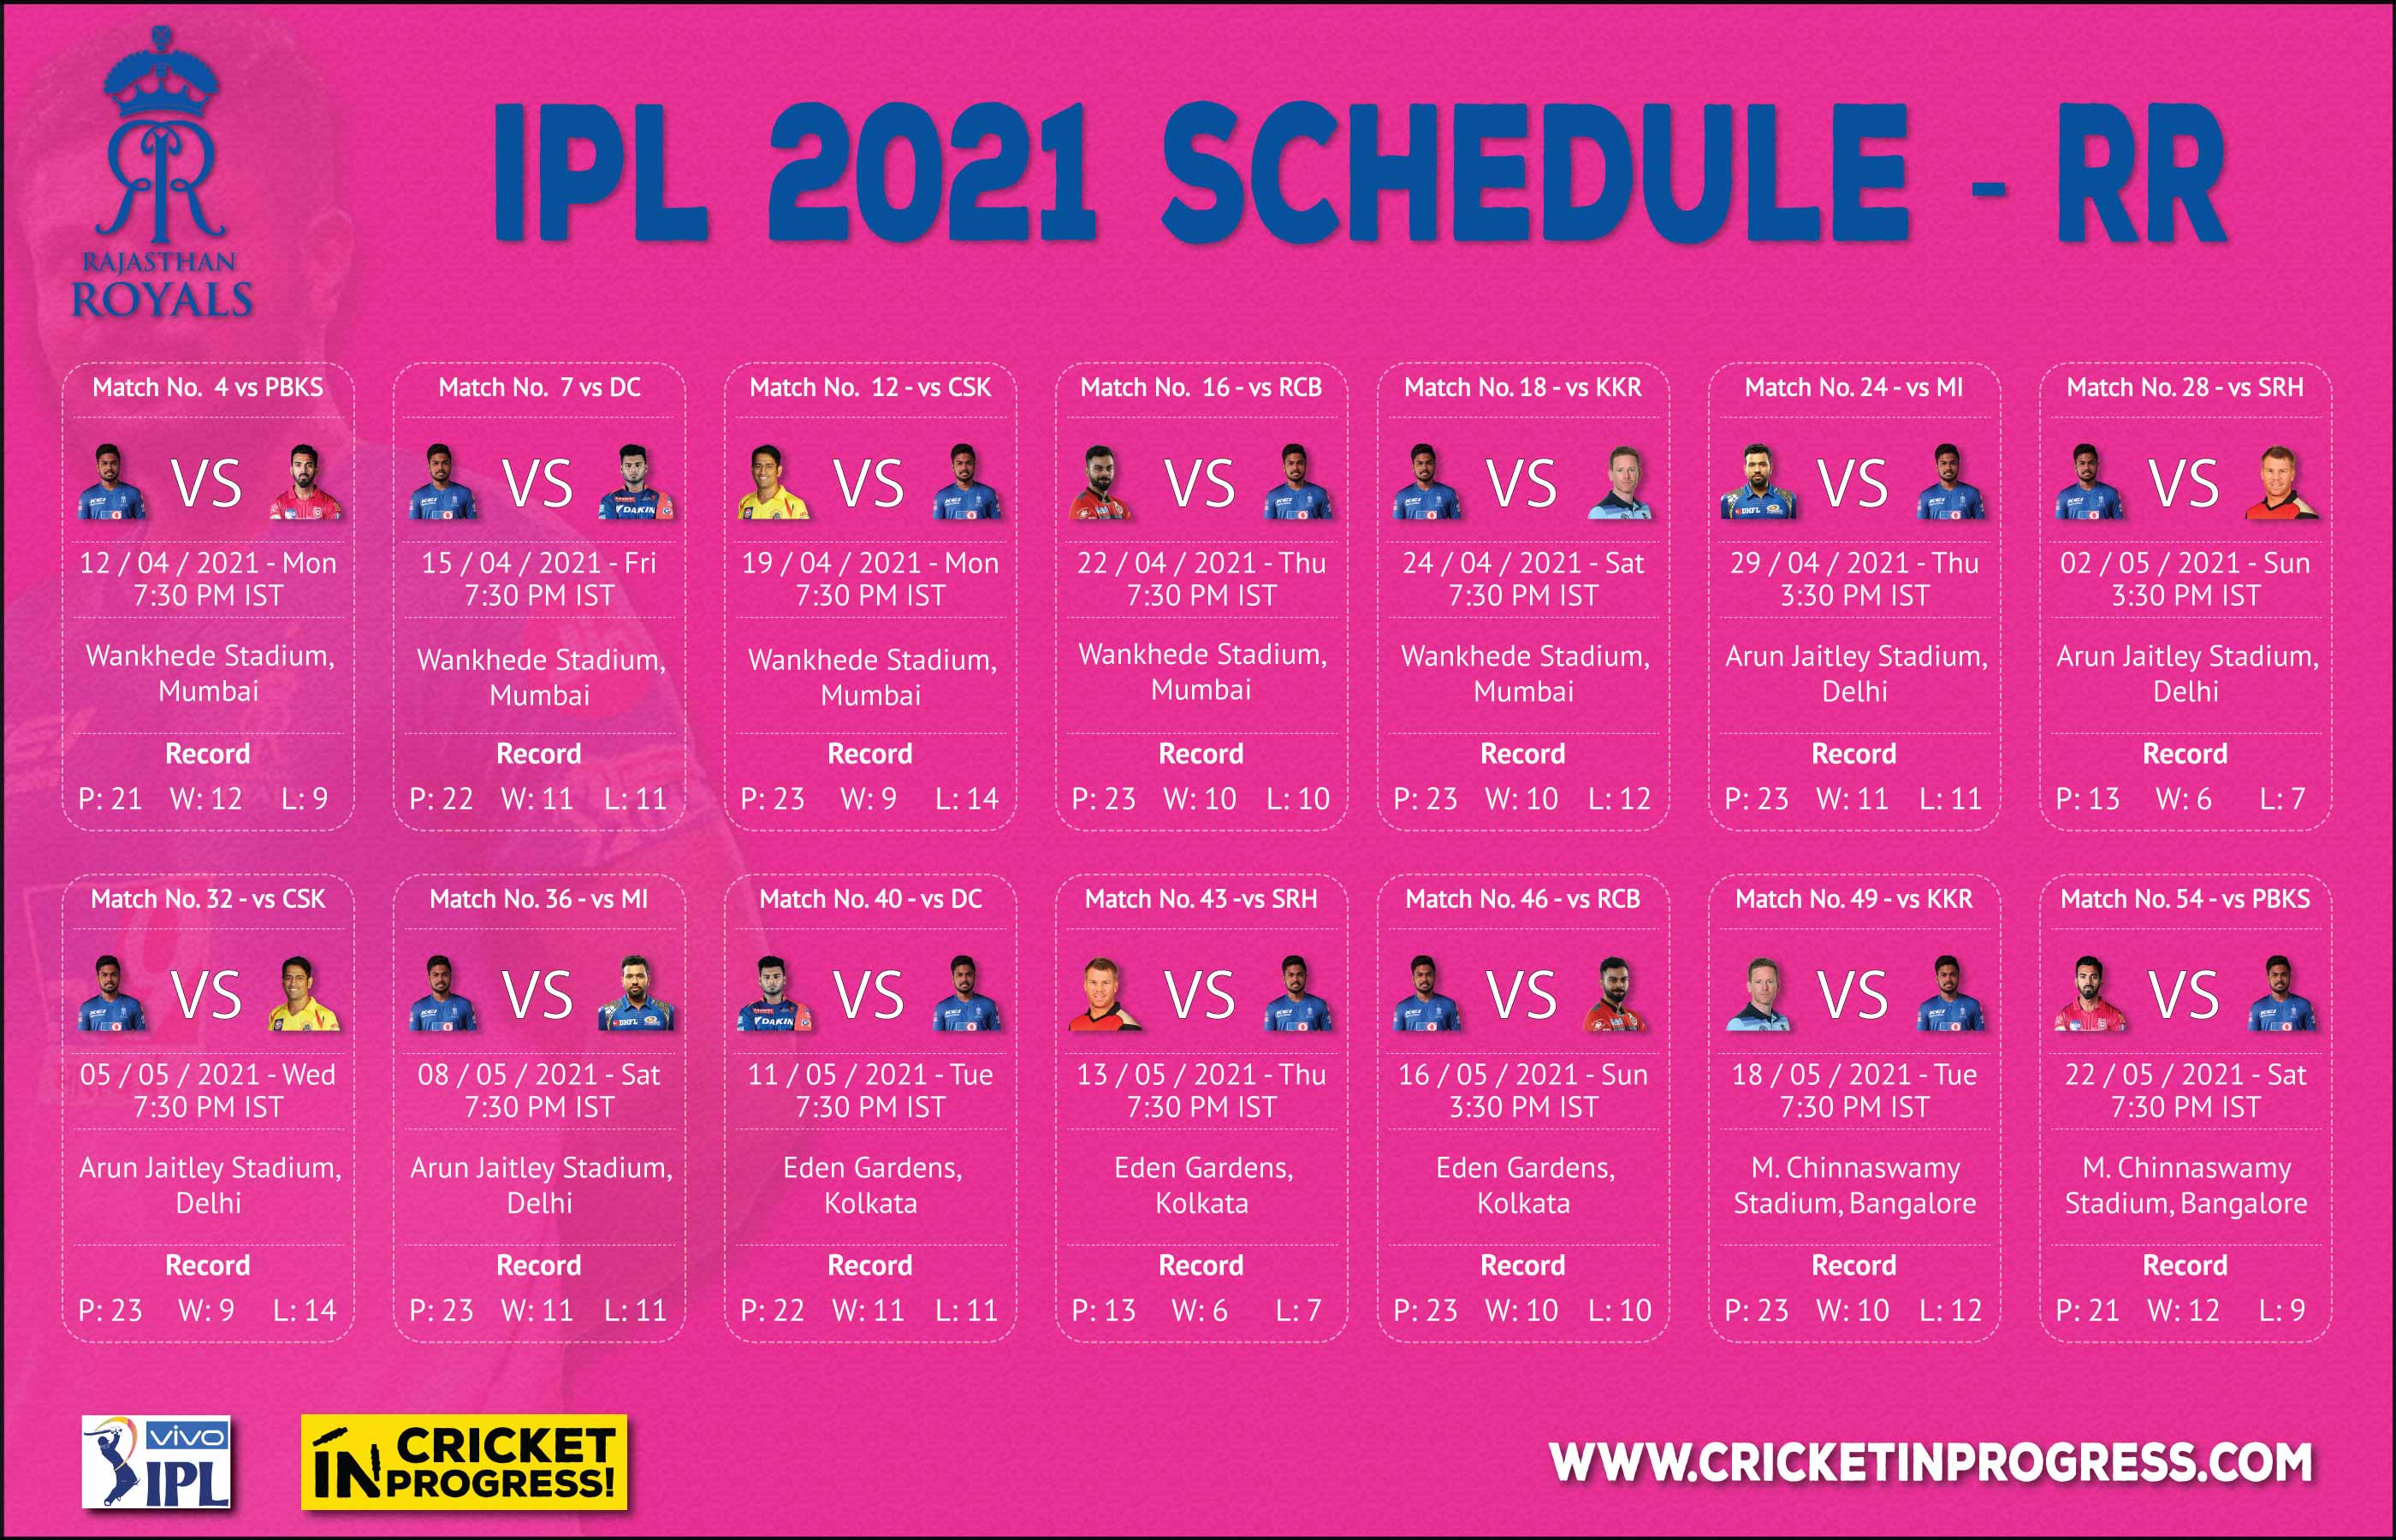 IPL 2021 RR Schedule